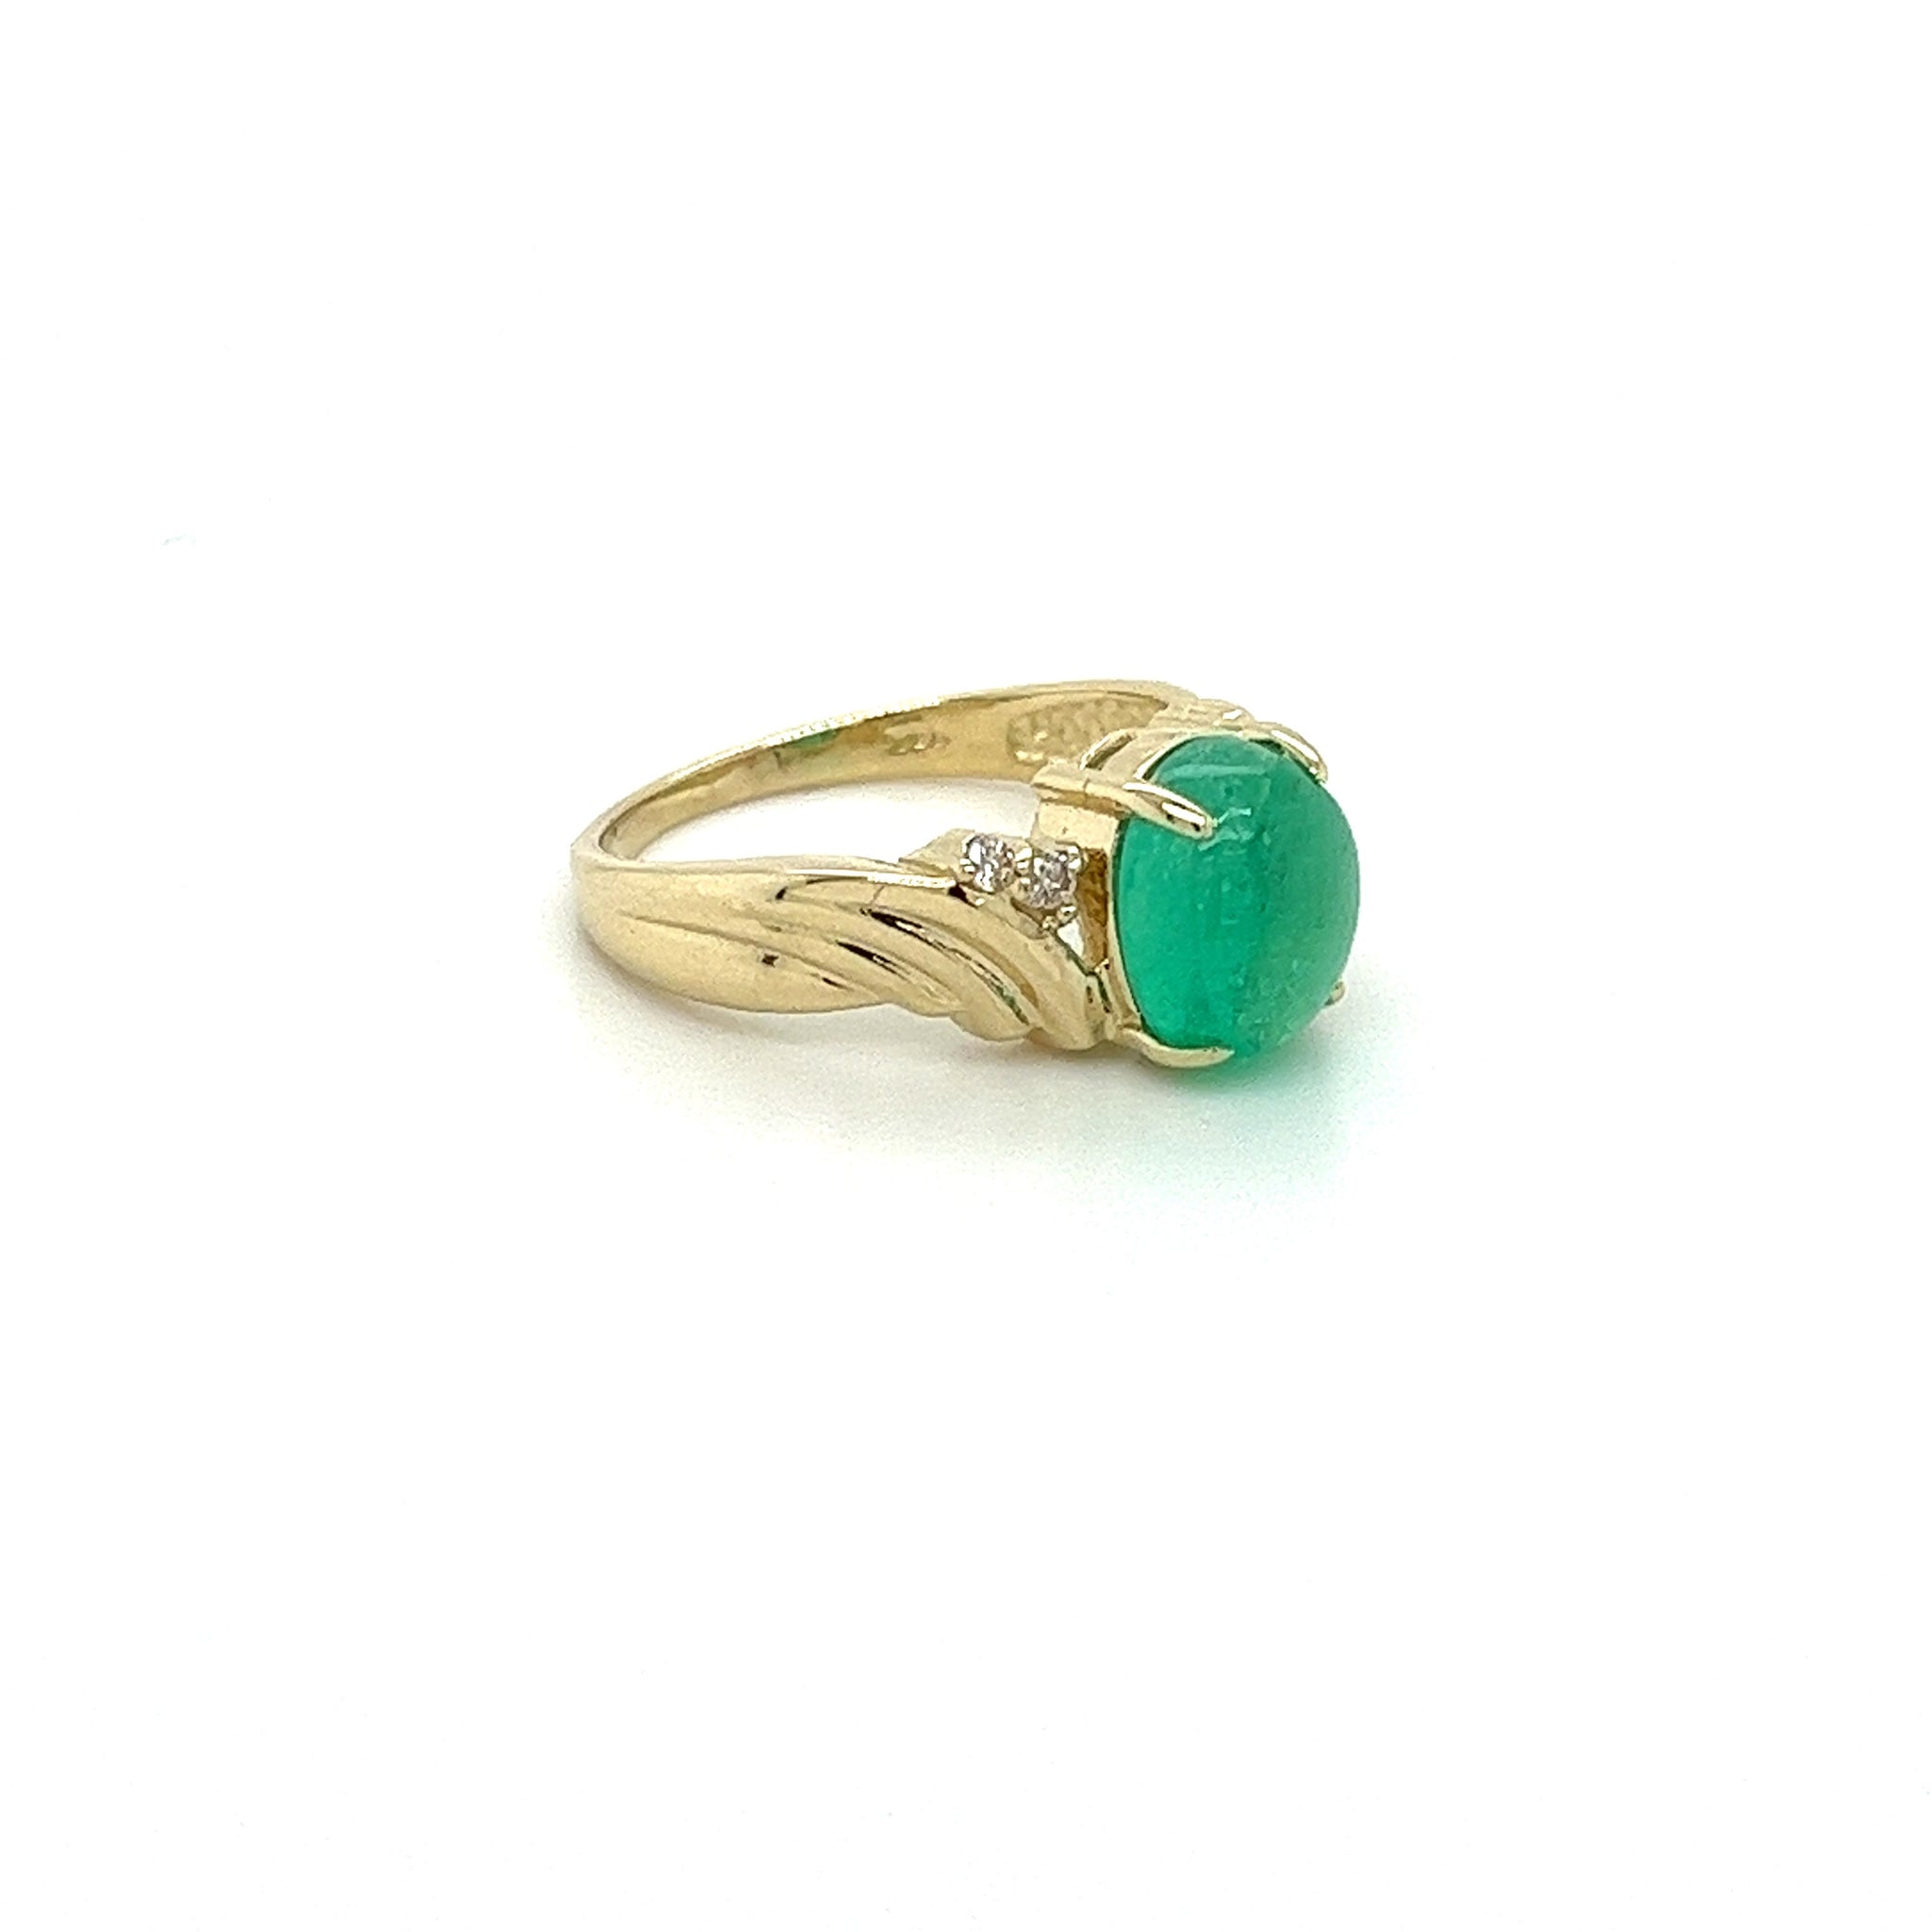 2 Carat Cabochon Cut Natural Emerald & Diamond in Textured 14K Yellow Gold Ring-Rings-ASSAY